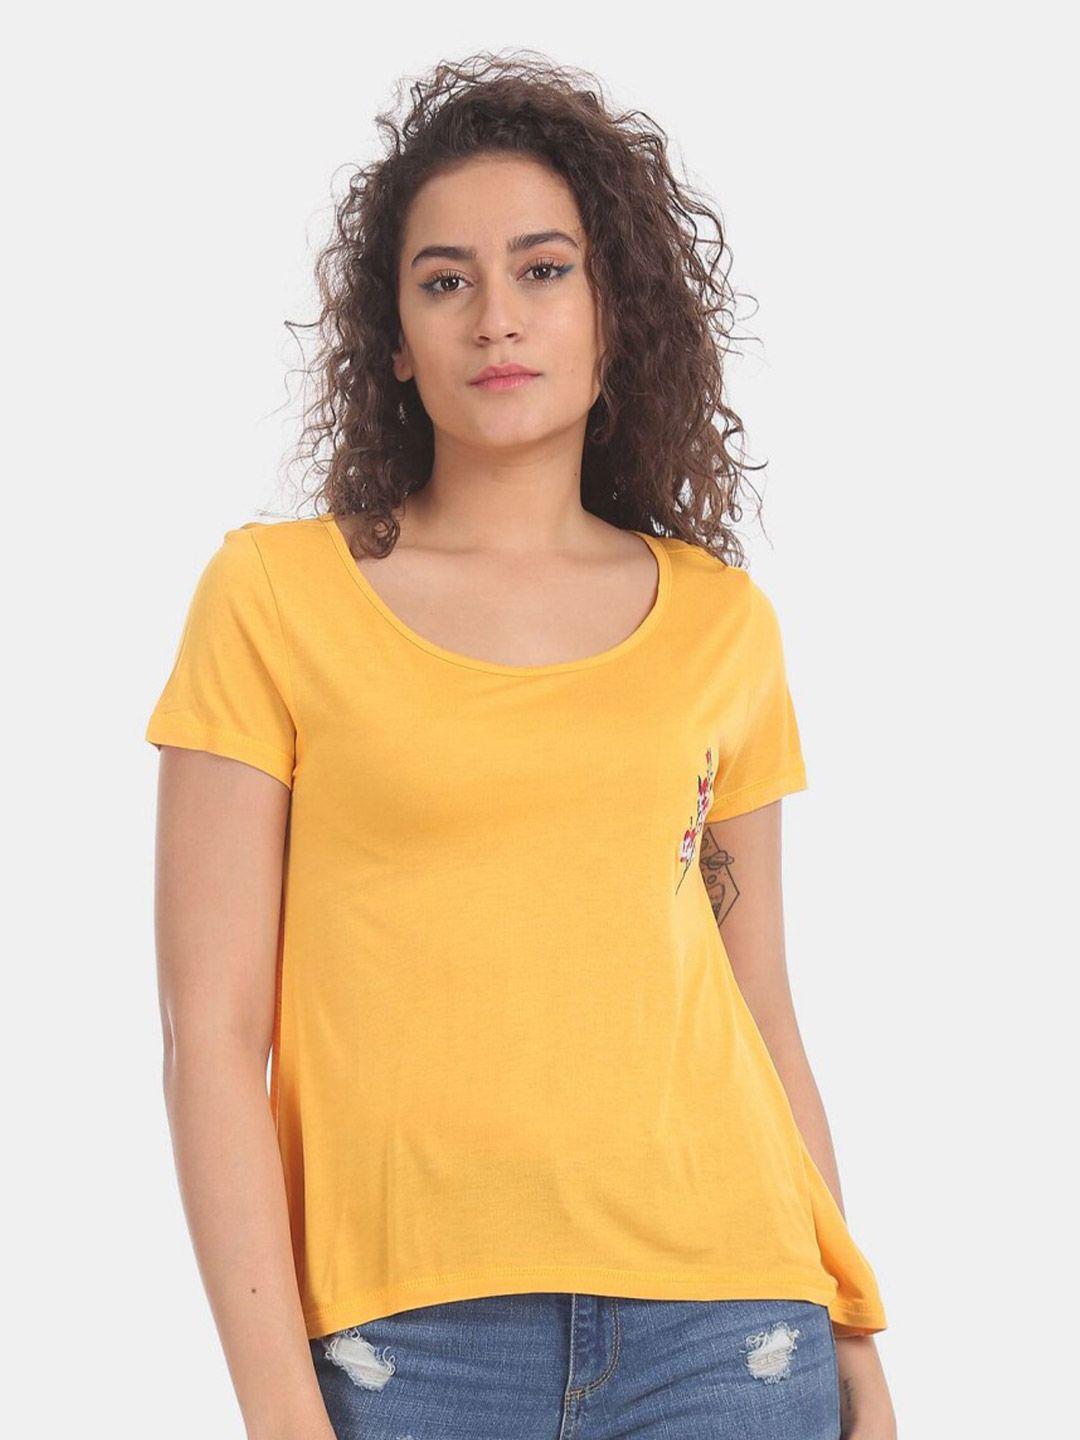 v-mart women cotton embroidered scoop neck t-shirt